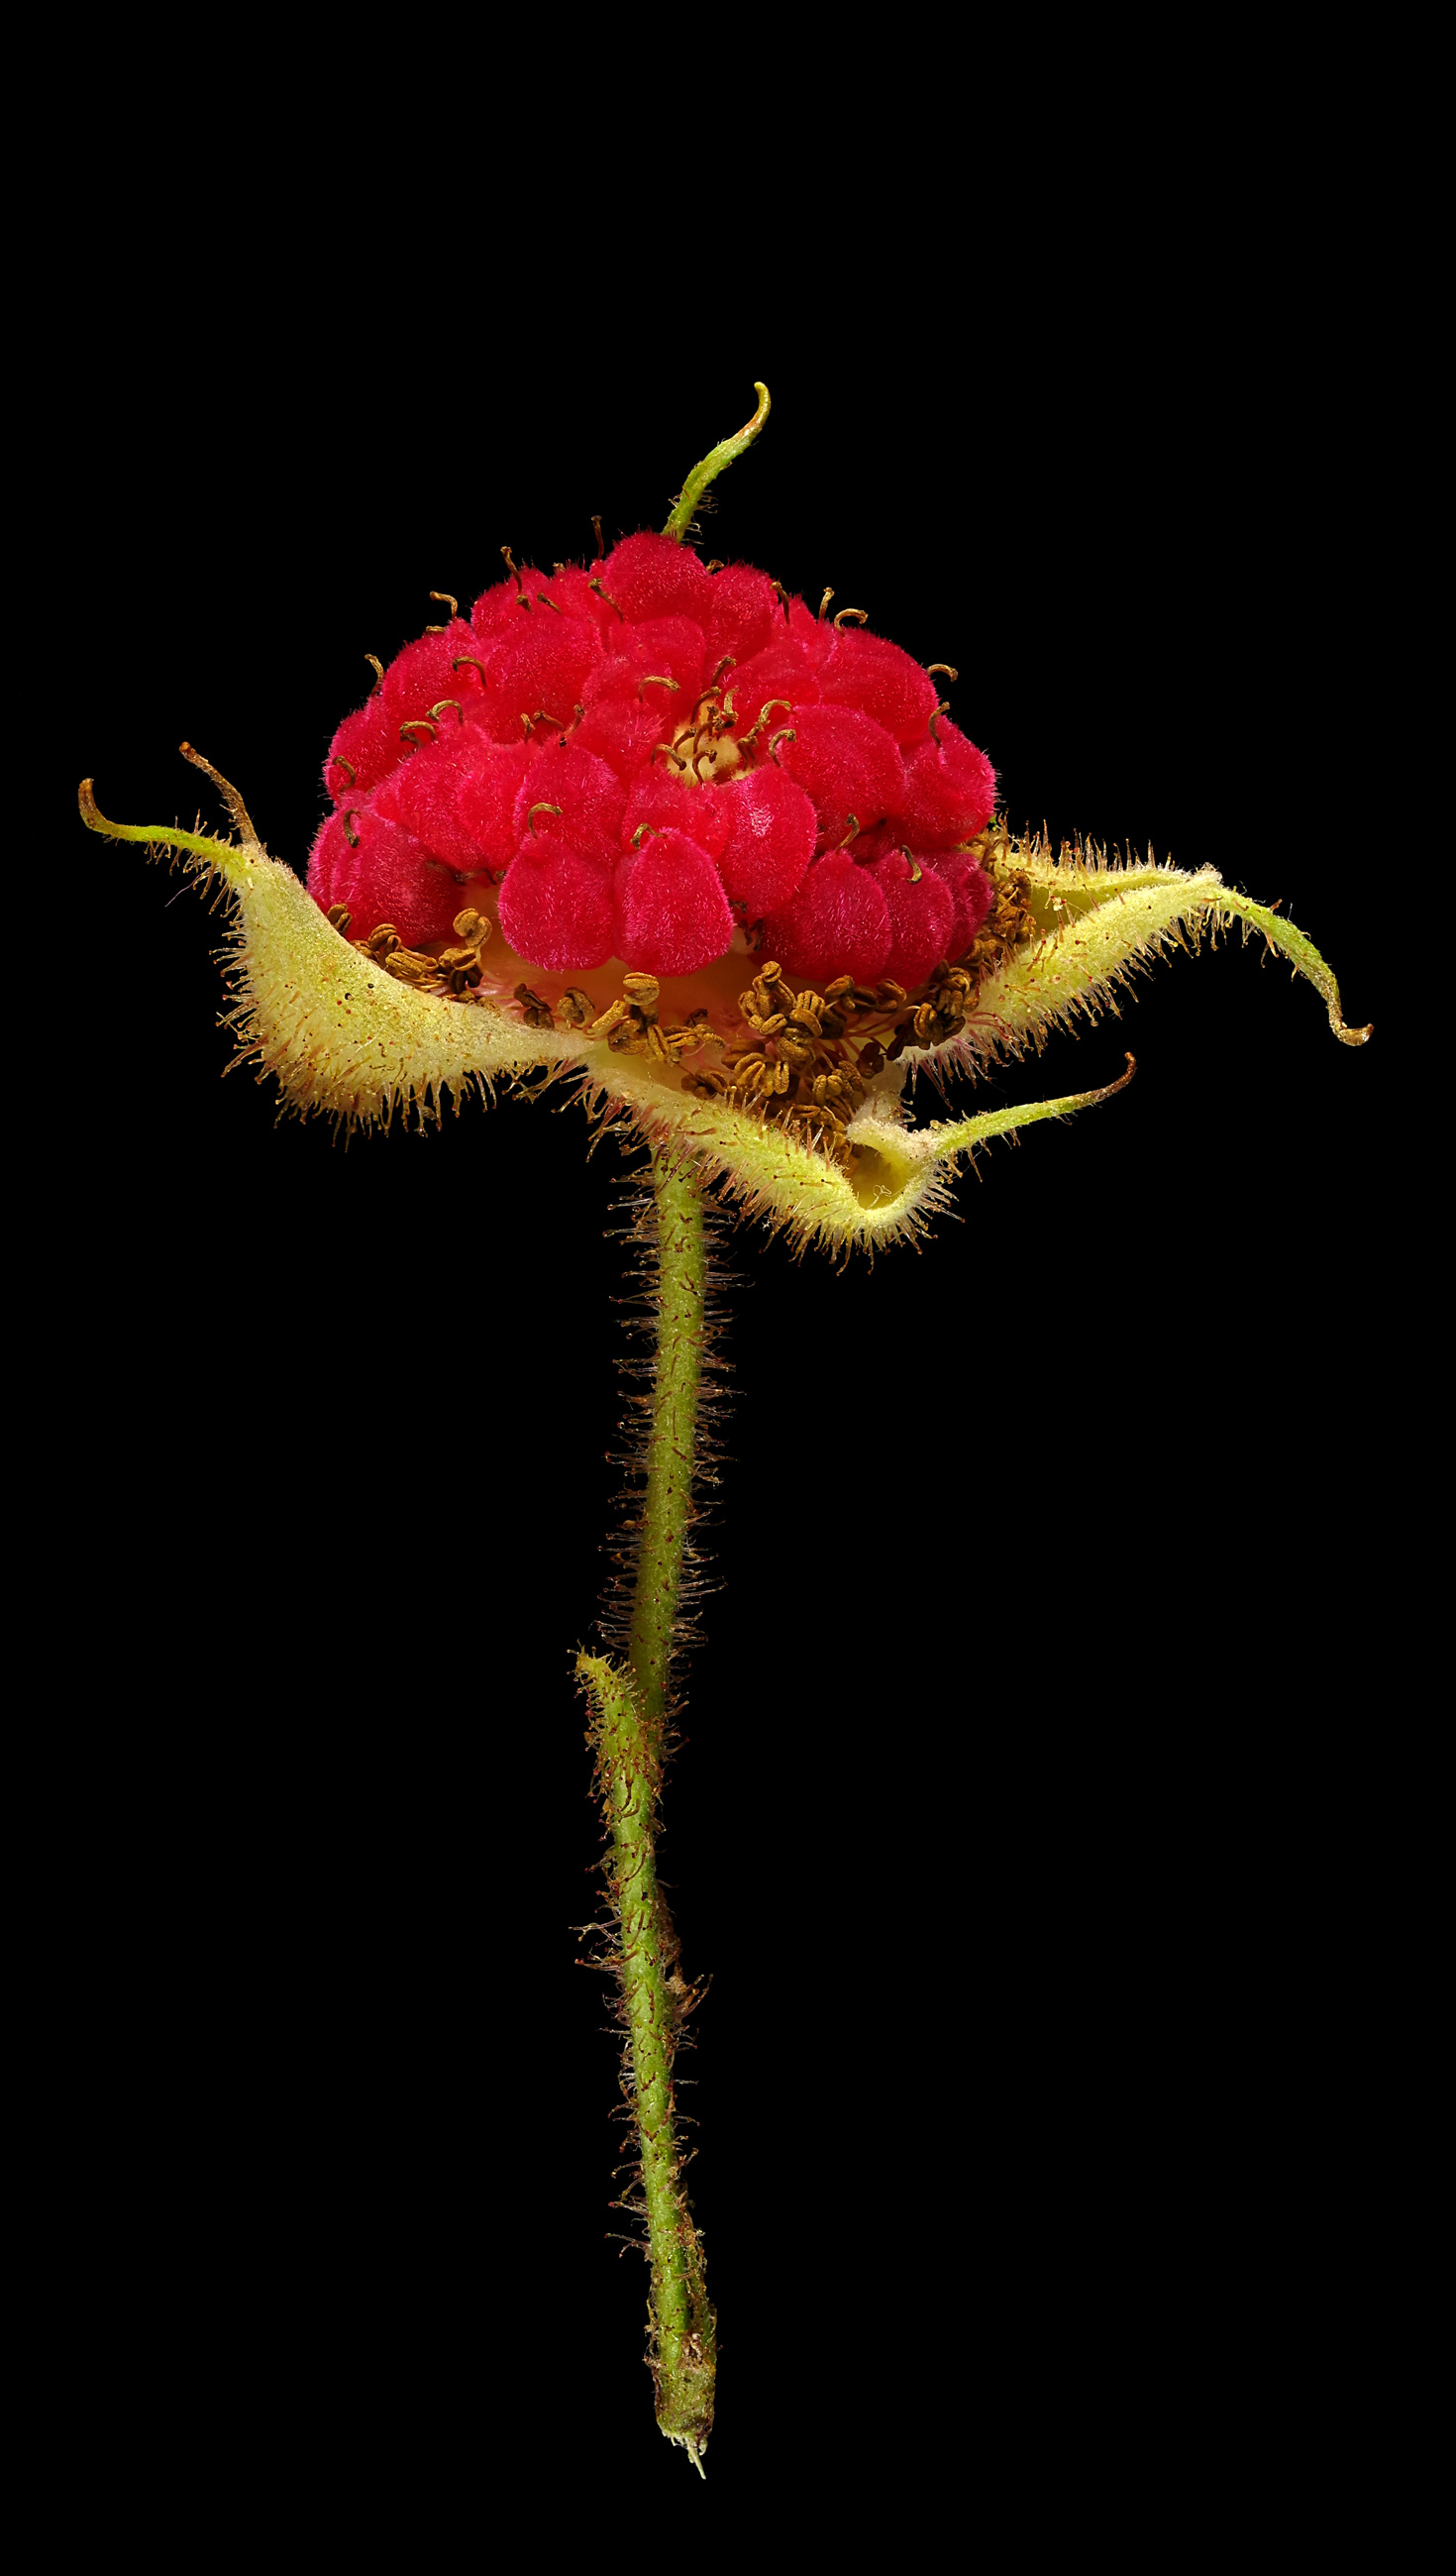 Virginia Raspberry: Rubus odoratus